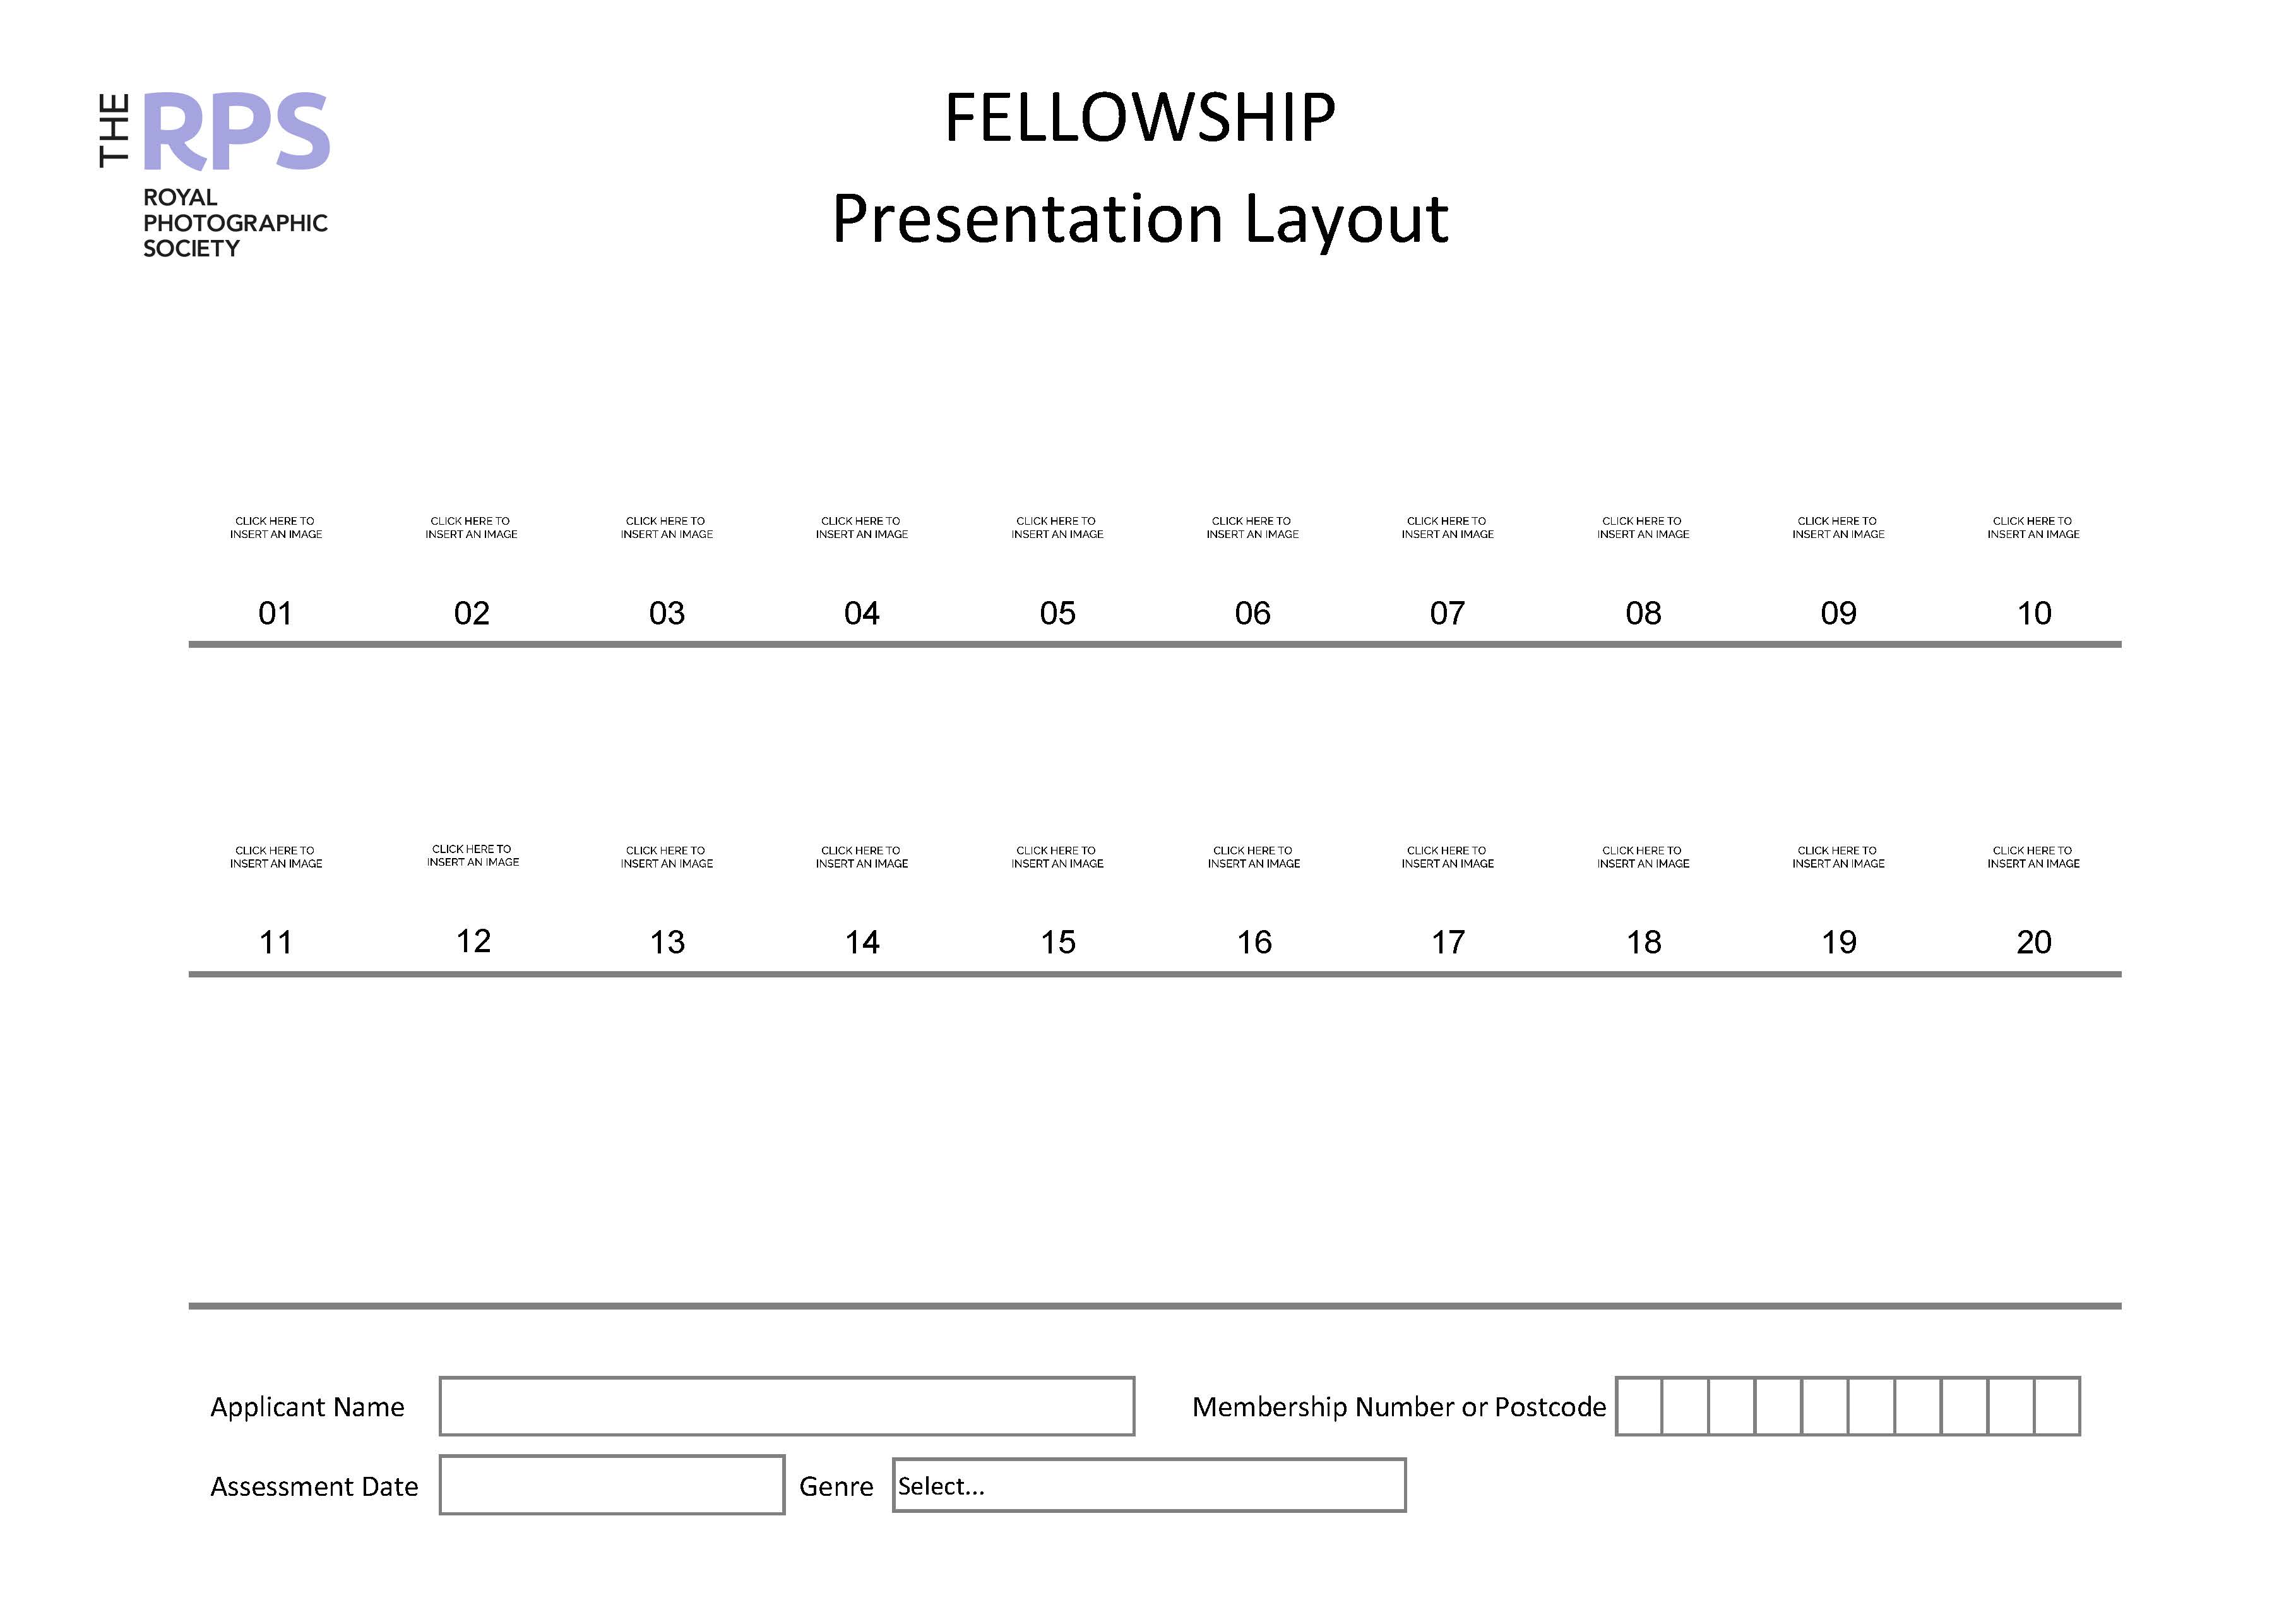 FRPS 2021 Presentation Layout 10 10